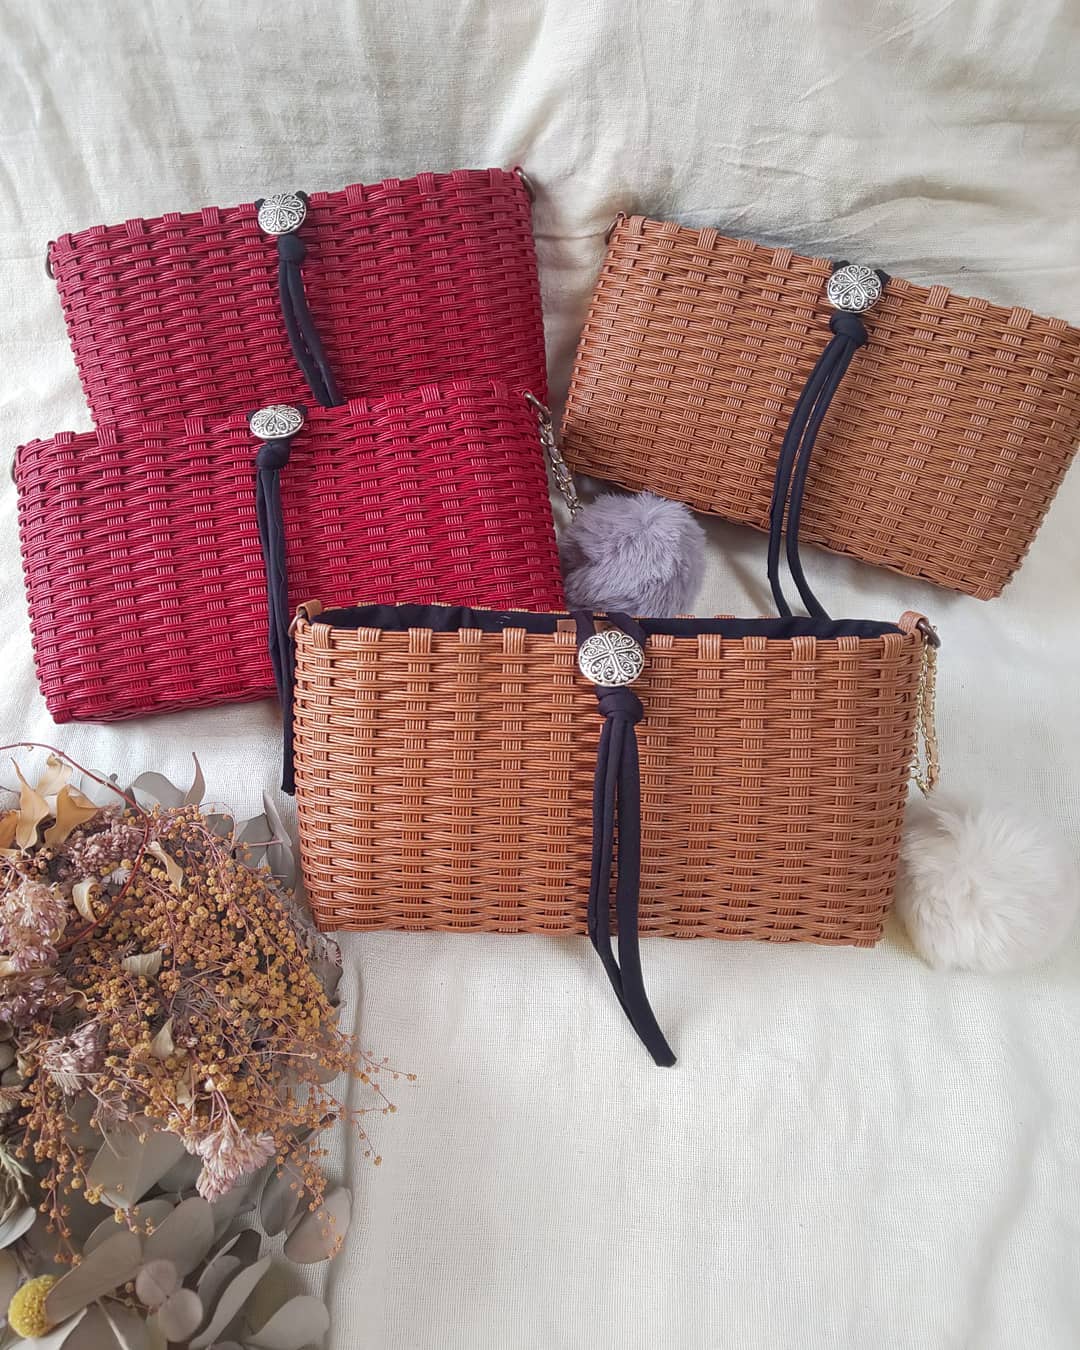 Basket Bag Styles You Will Love | Jiji Blog